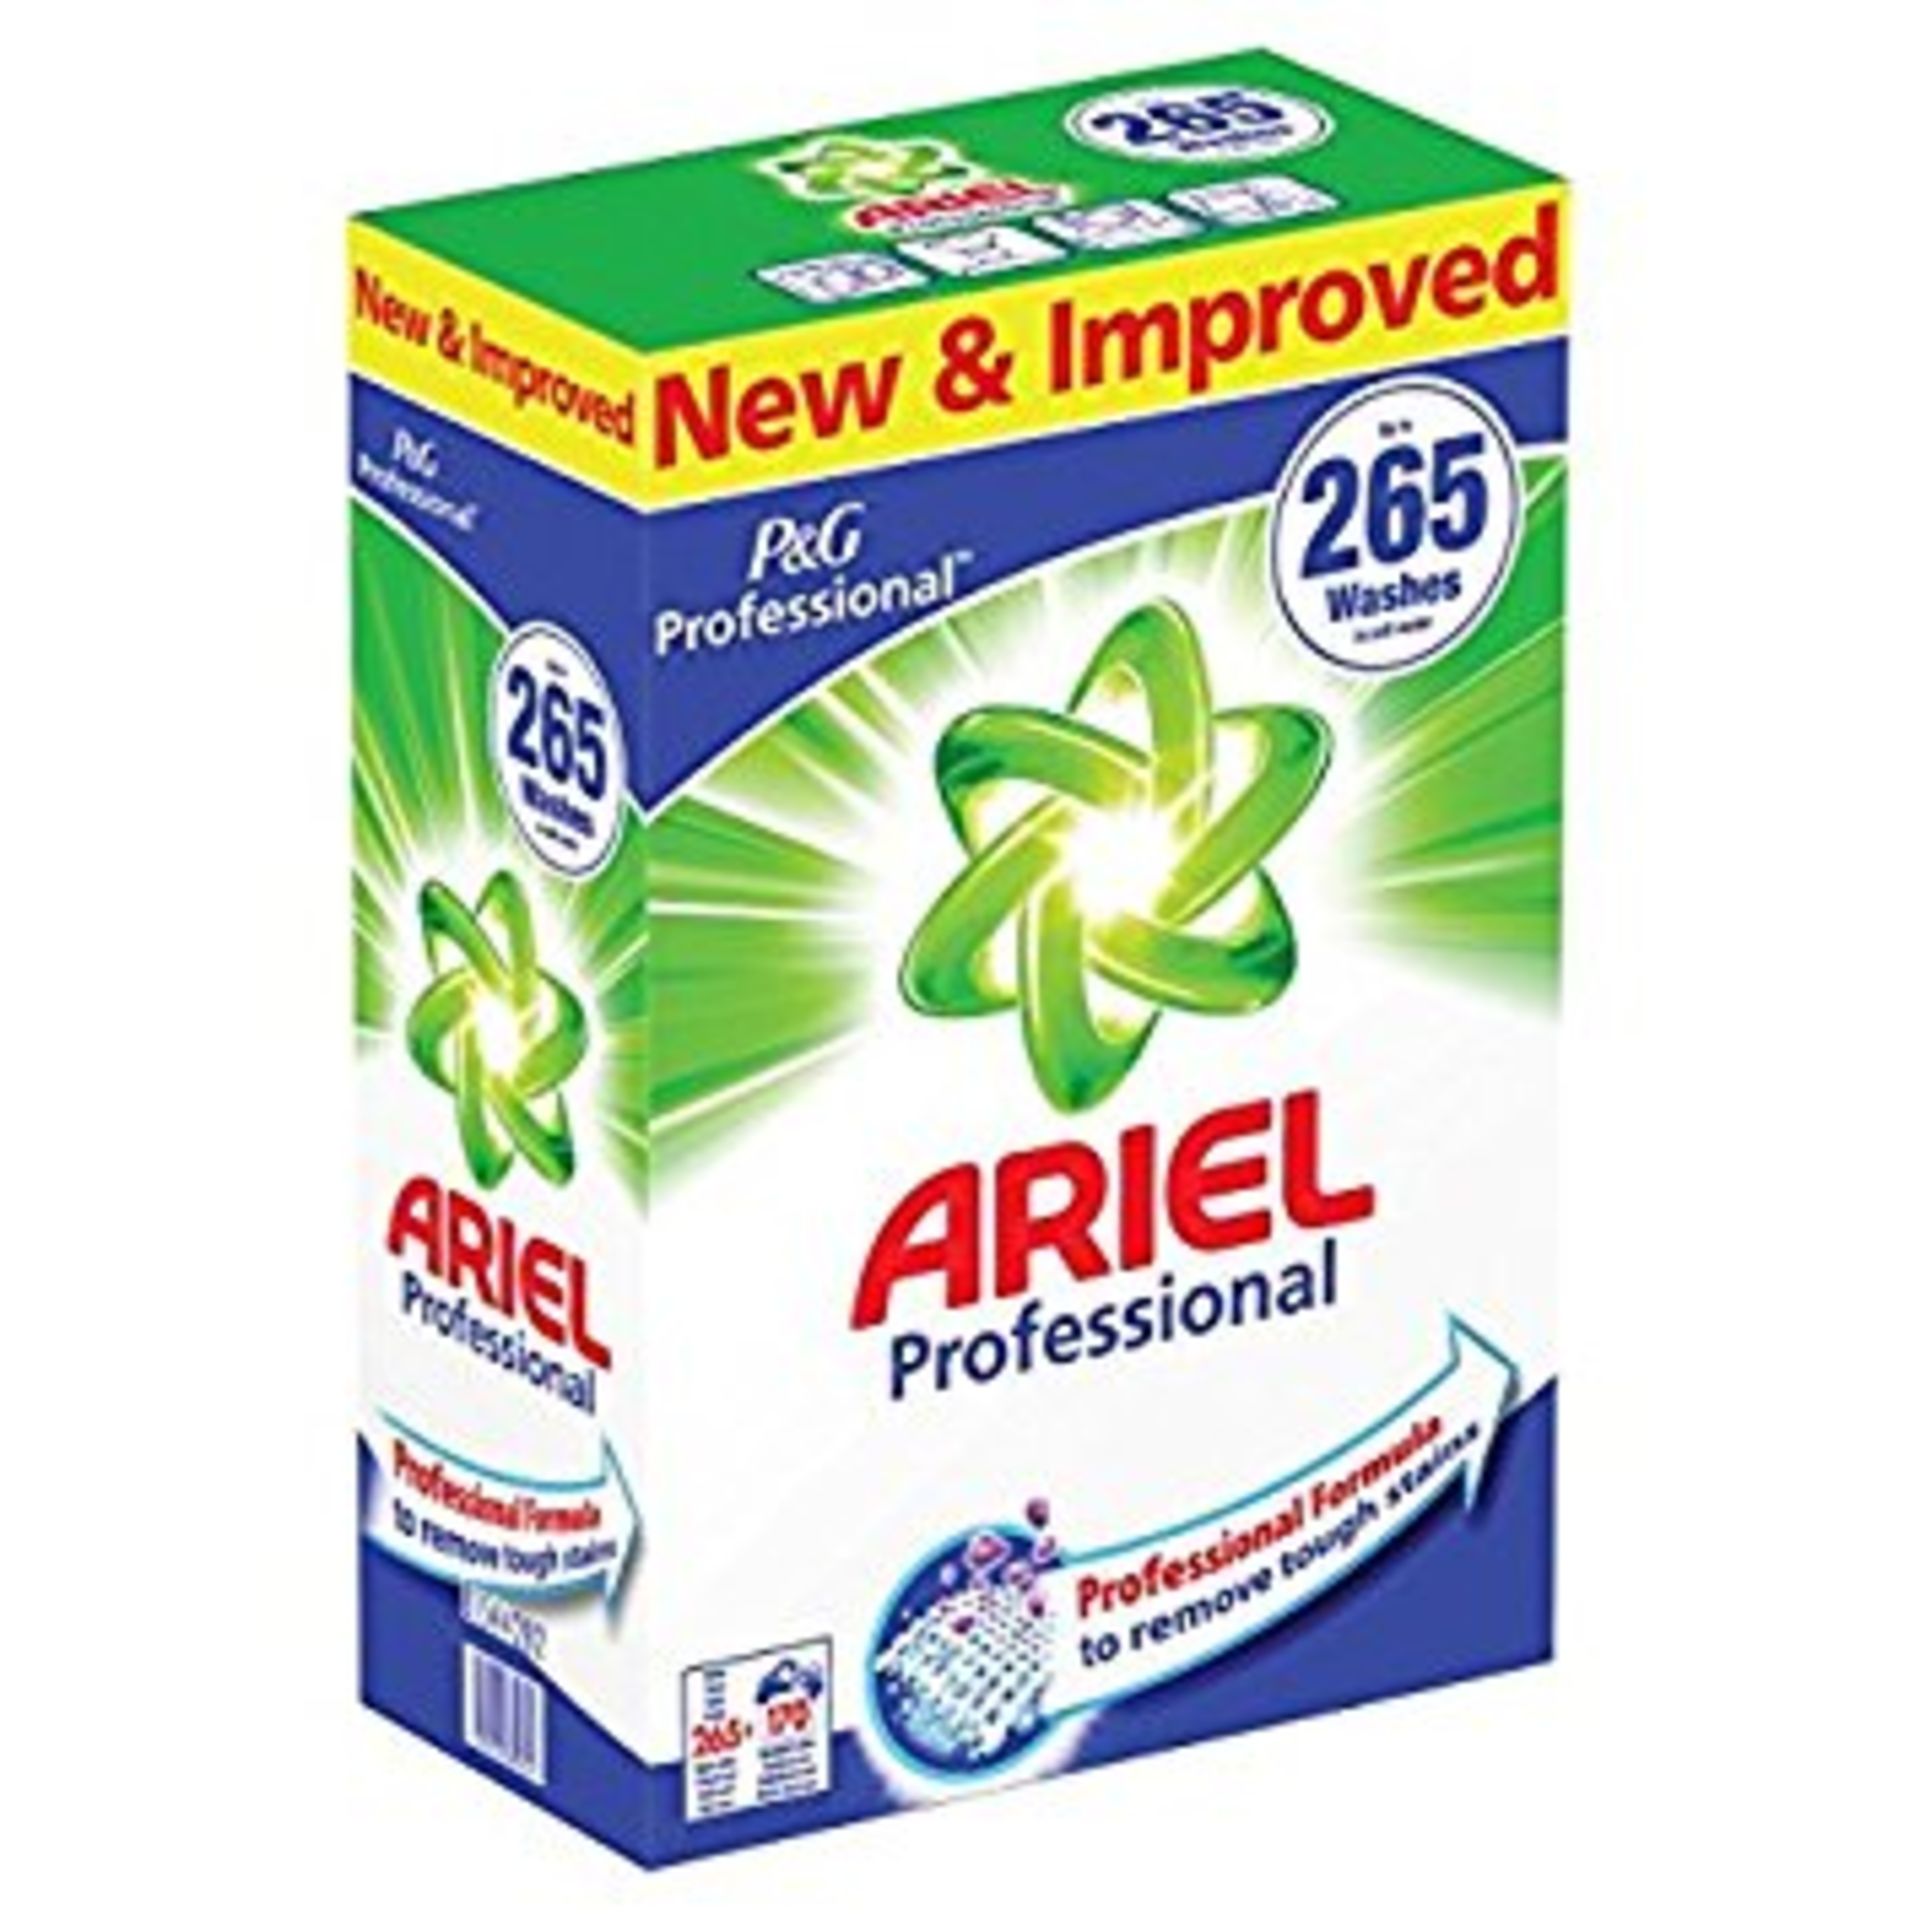 V *TRADE QTY* Brand New Ariel Professional XXL 265 Washes Washing Powder X 4 YOUR BID PRICE TO BE